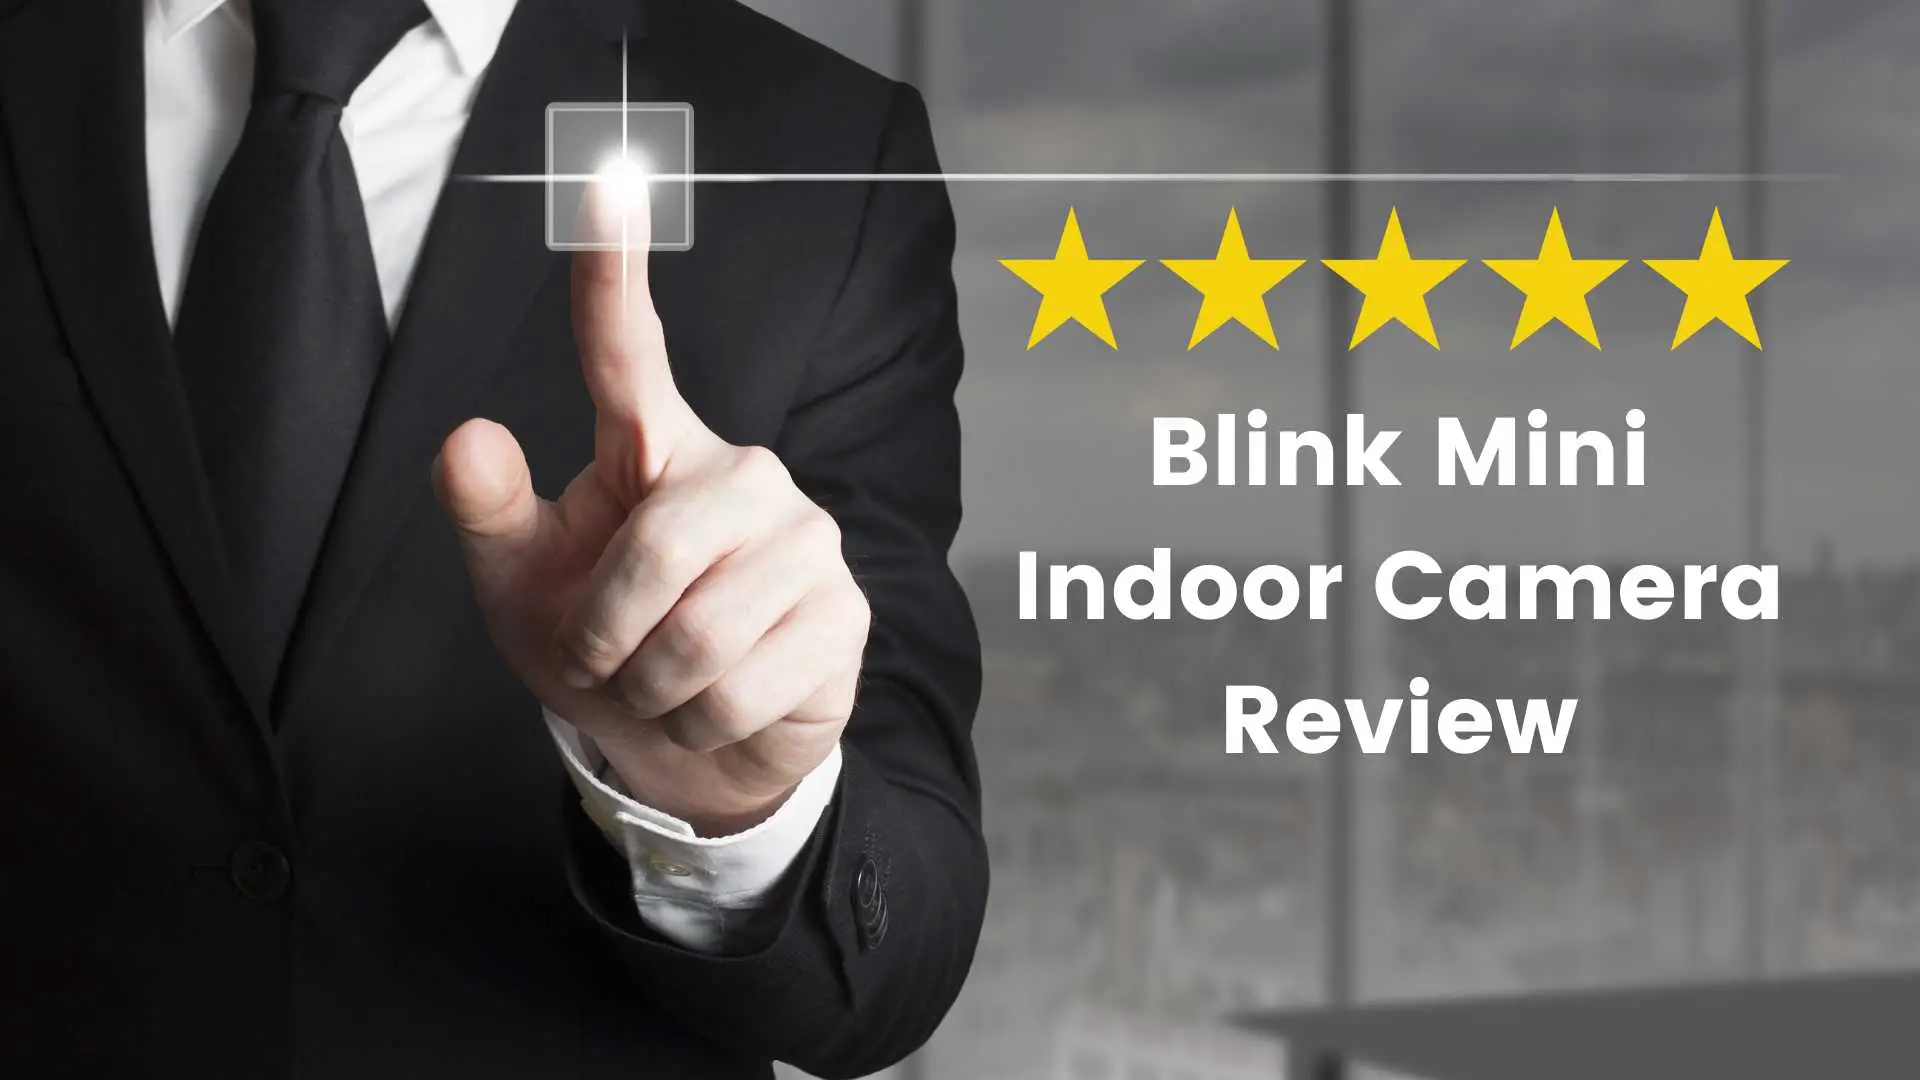 Blink Mini Indoor Camera Review